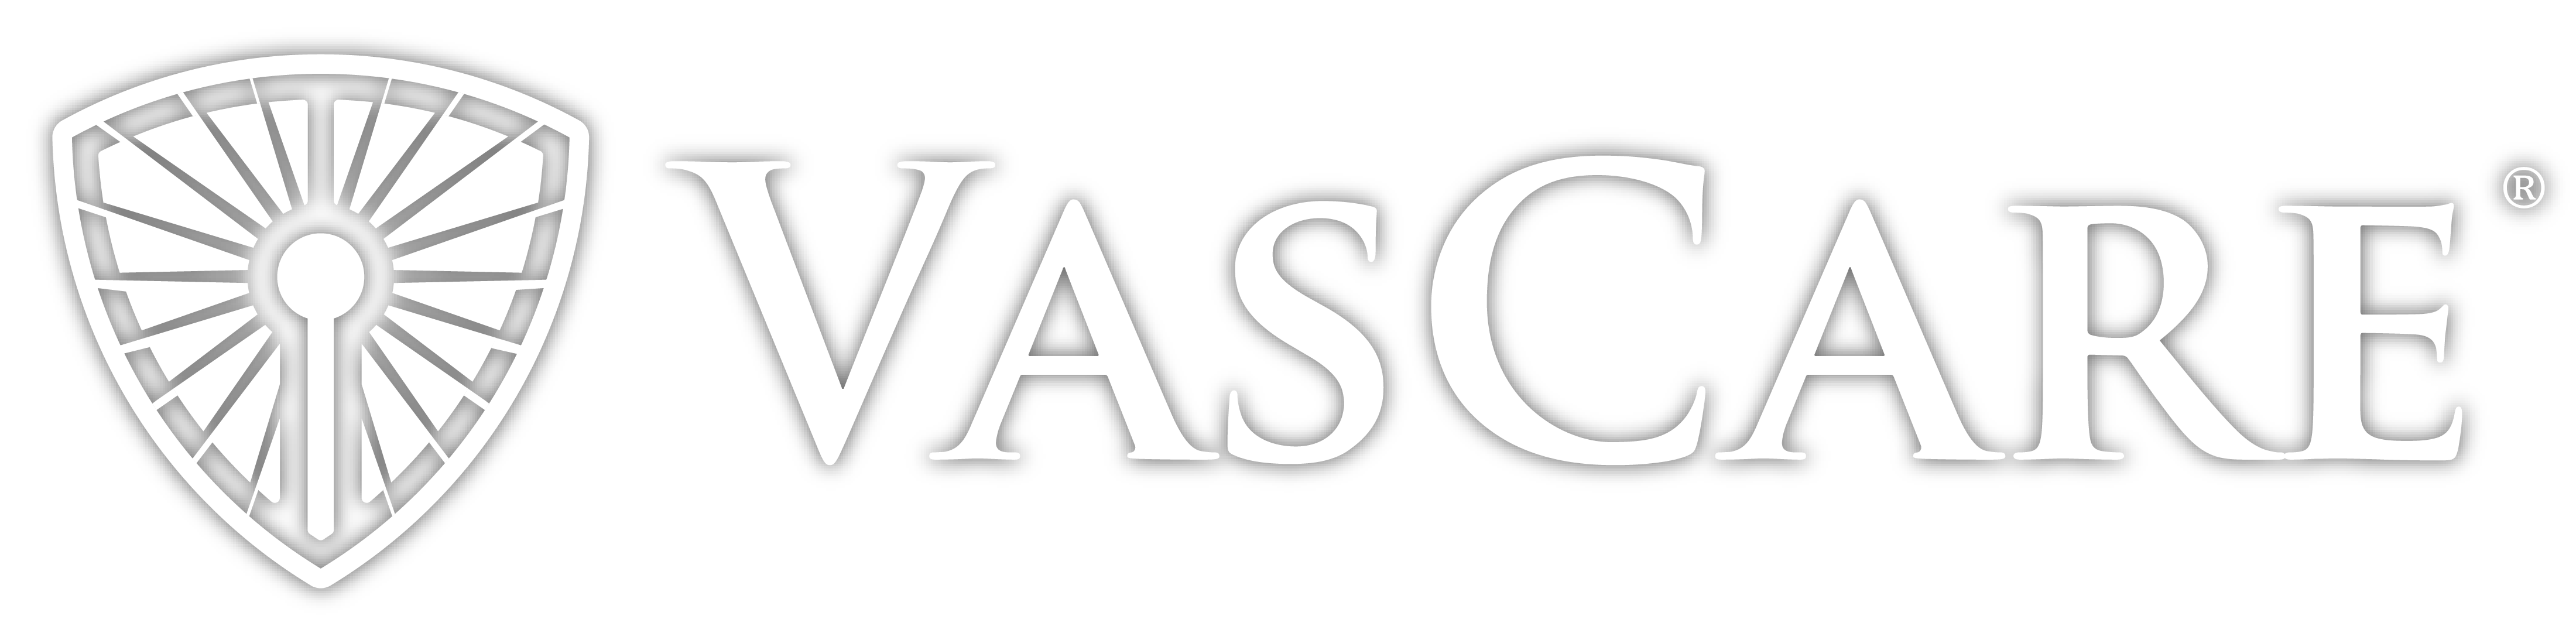 vascare-logo-1color-Horizontal-R-white-shadow-01